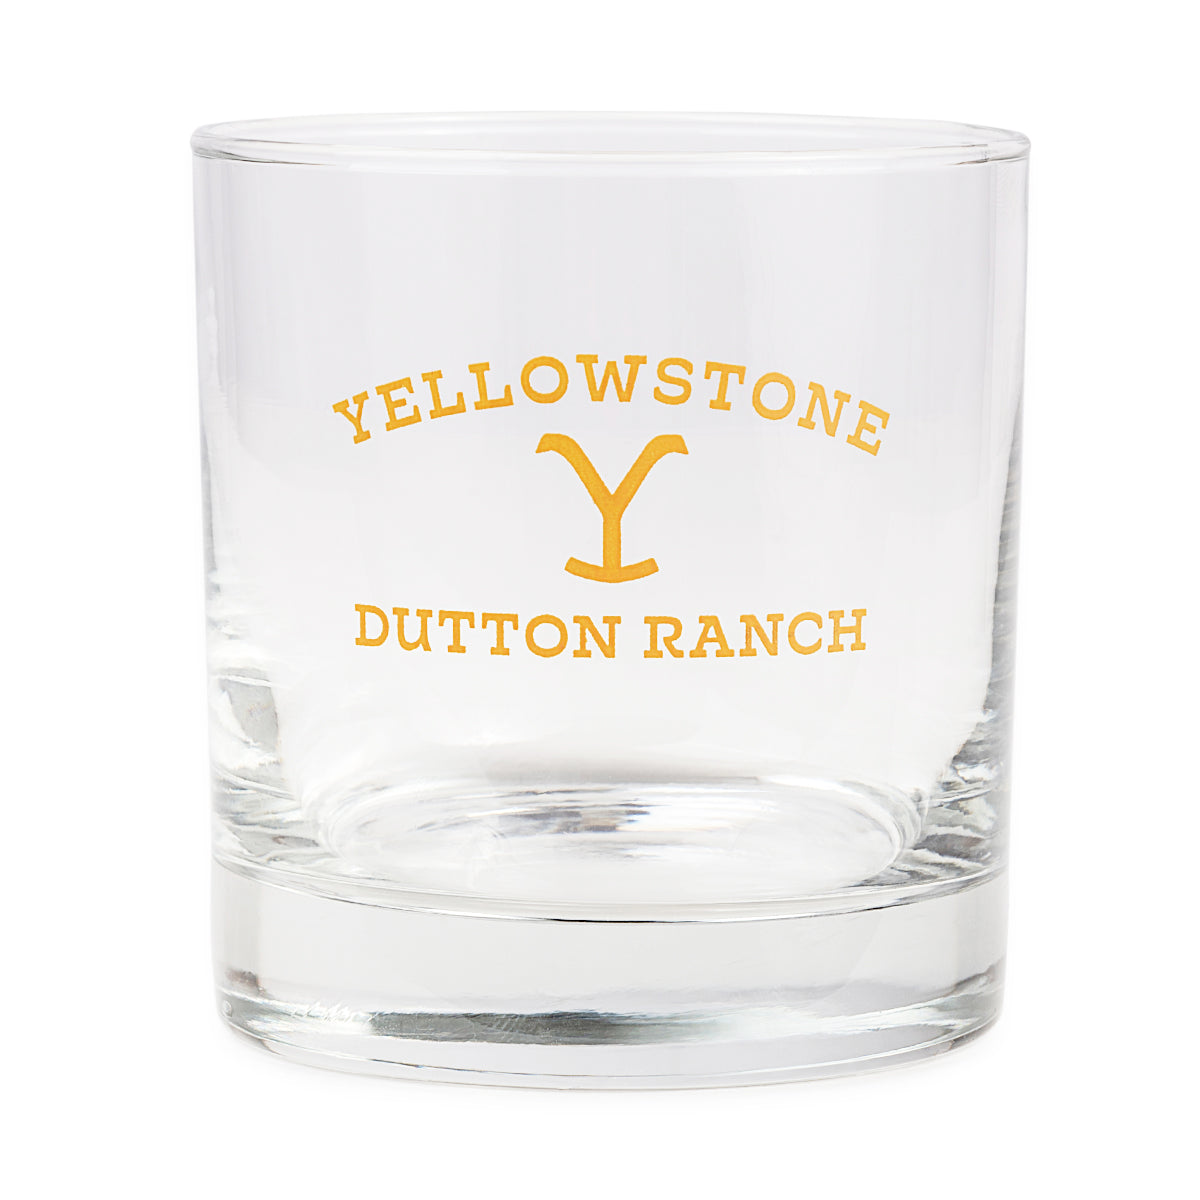 Glass de rocs Ranch Ranch Yellowstone Dutton